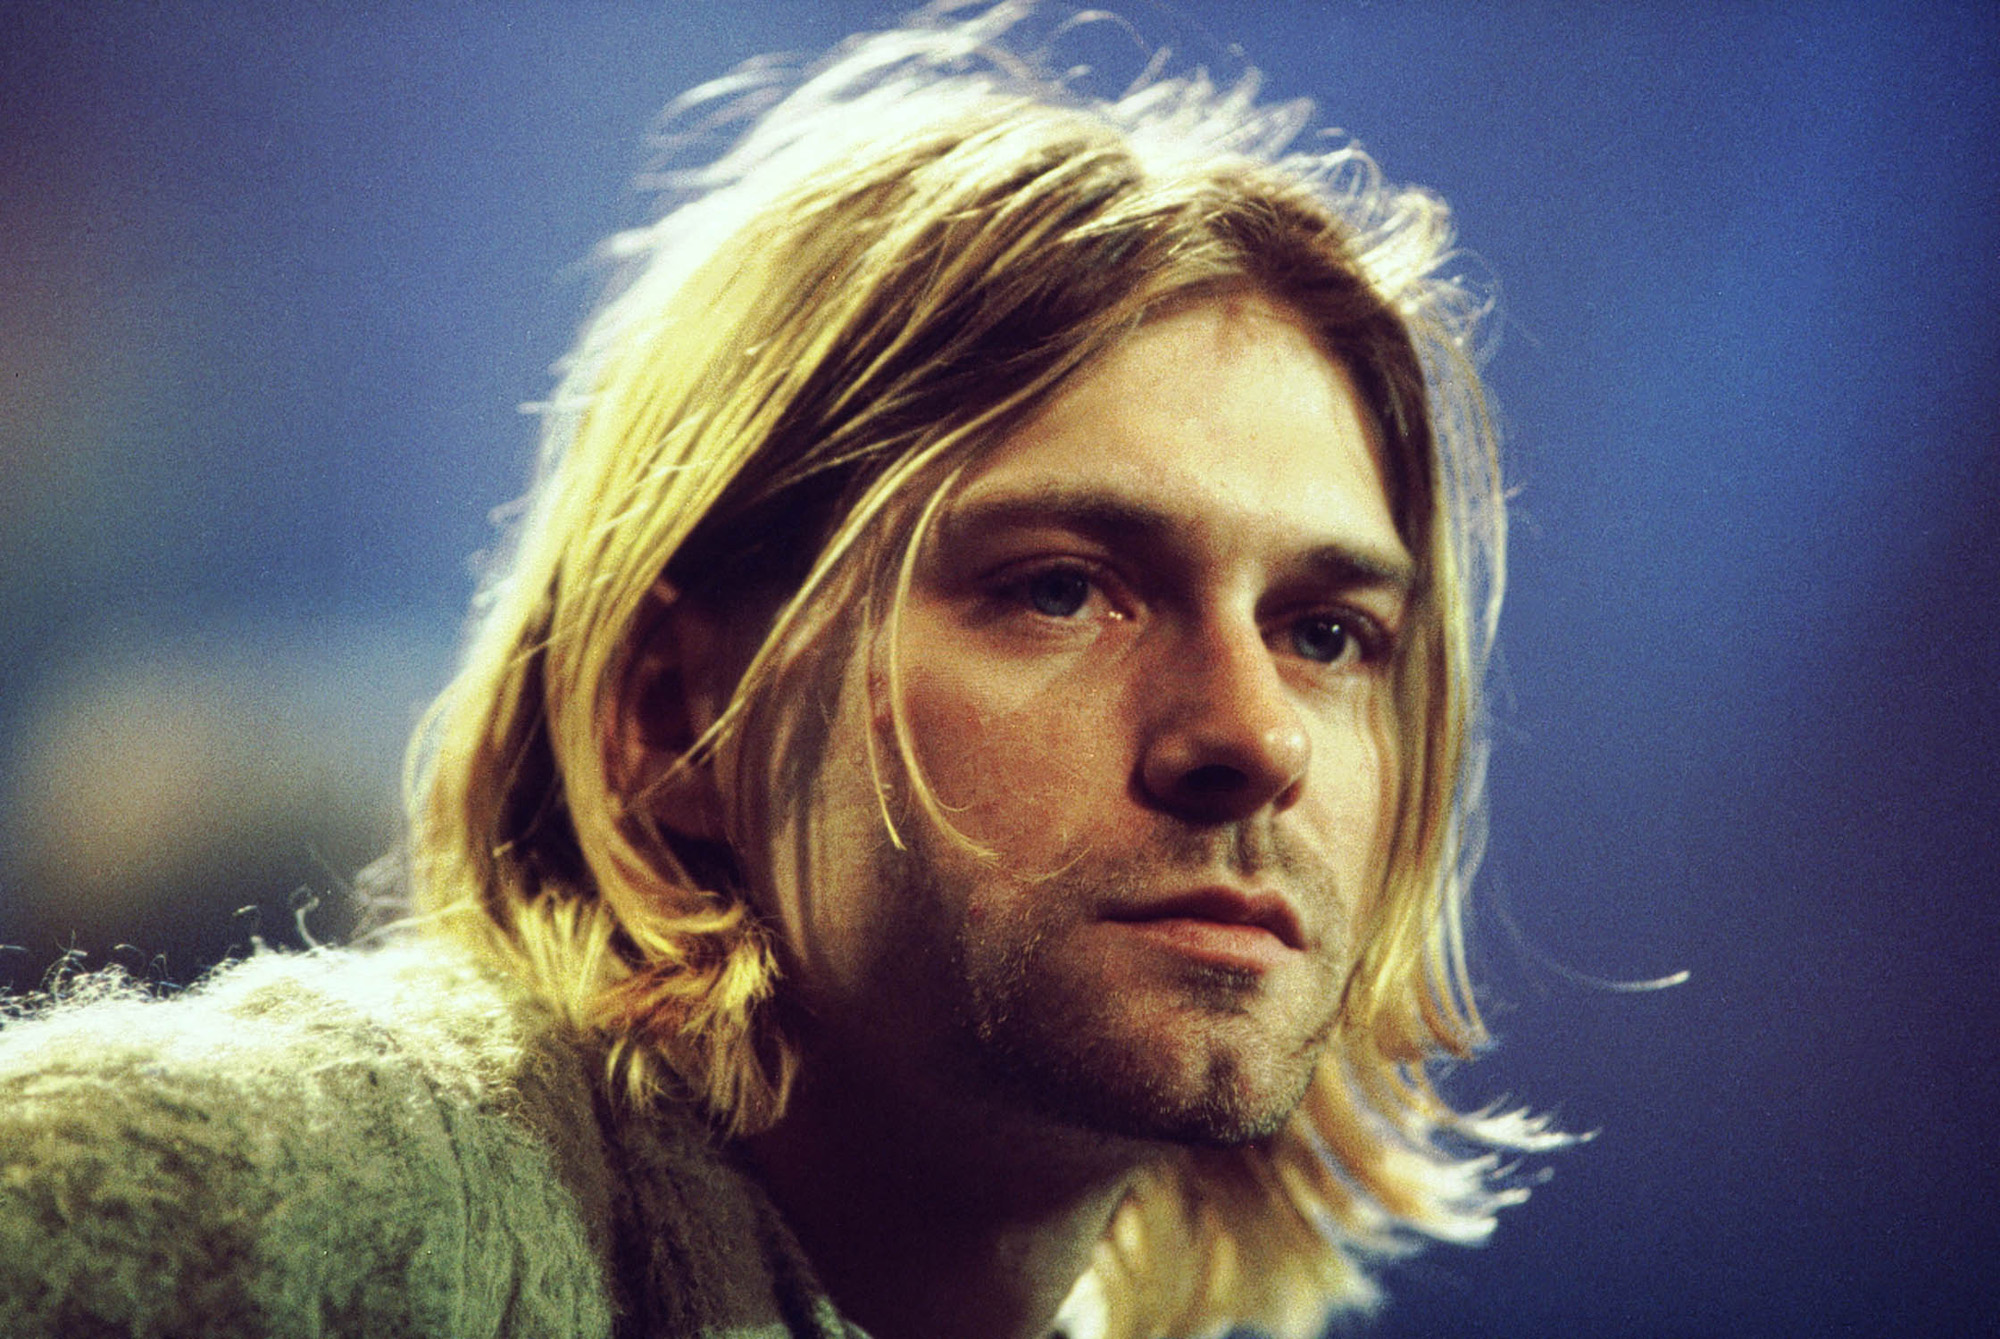 MTV Unplugged Nirvana “